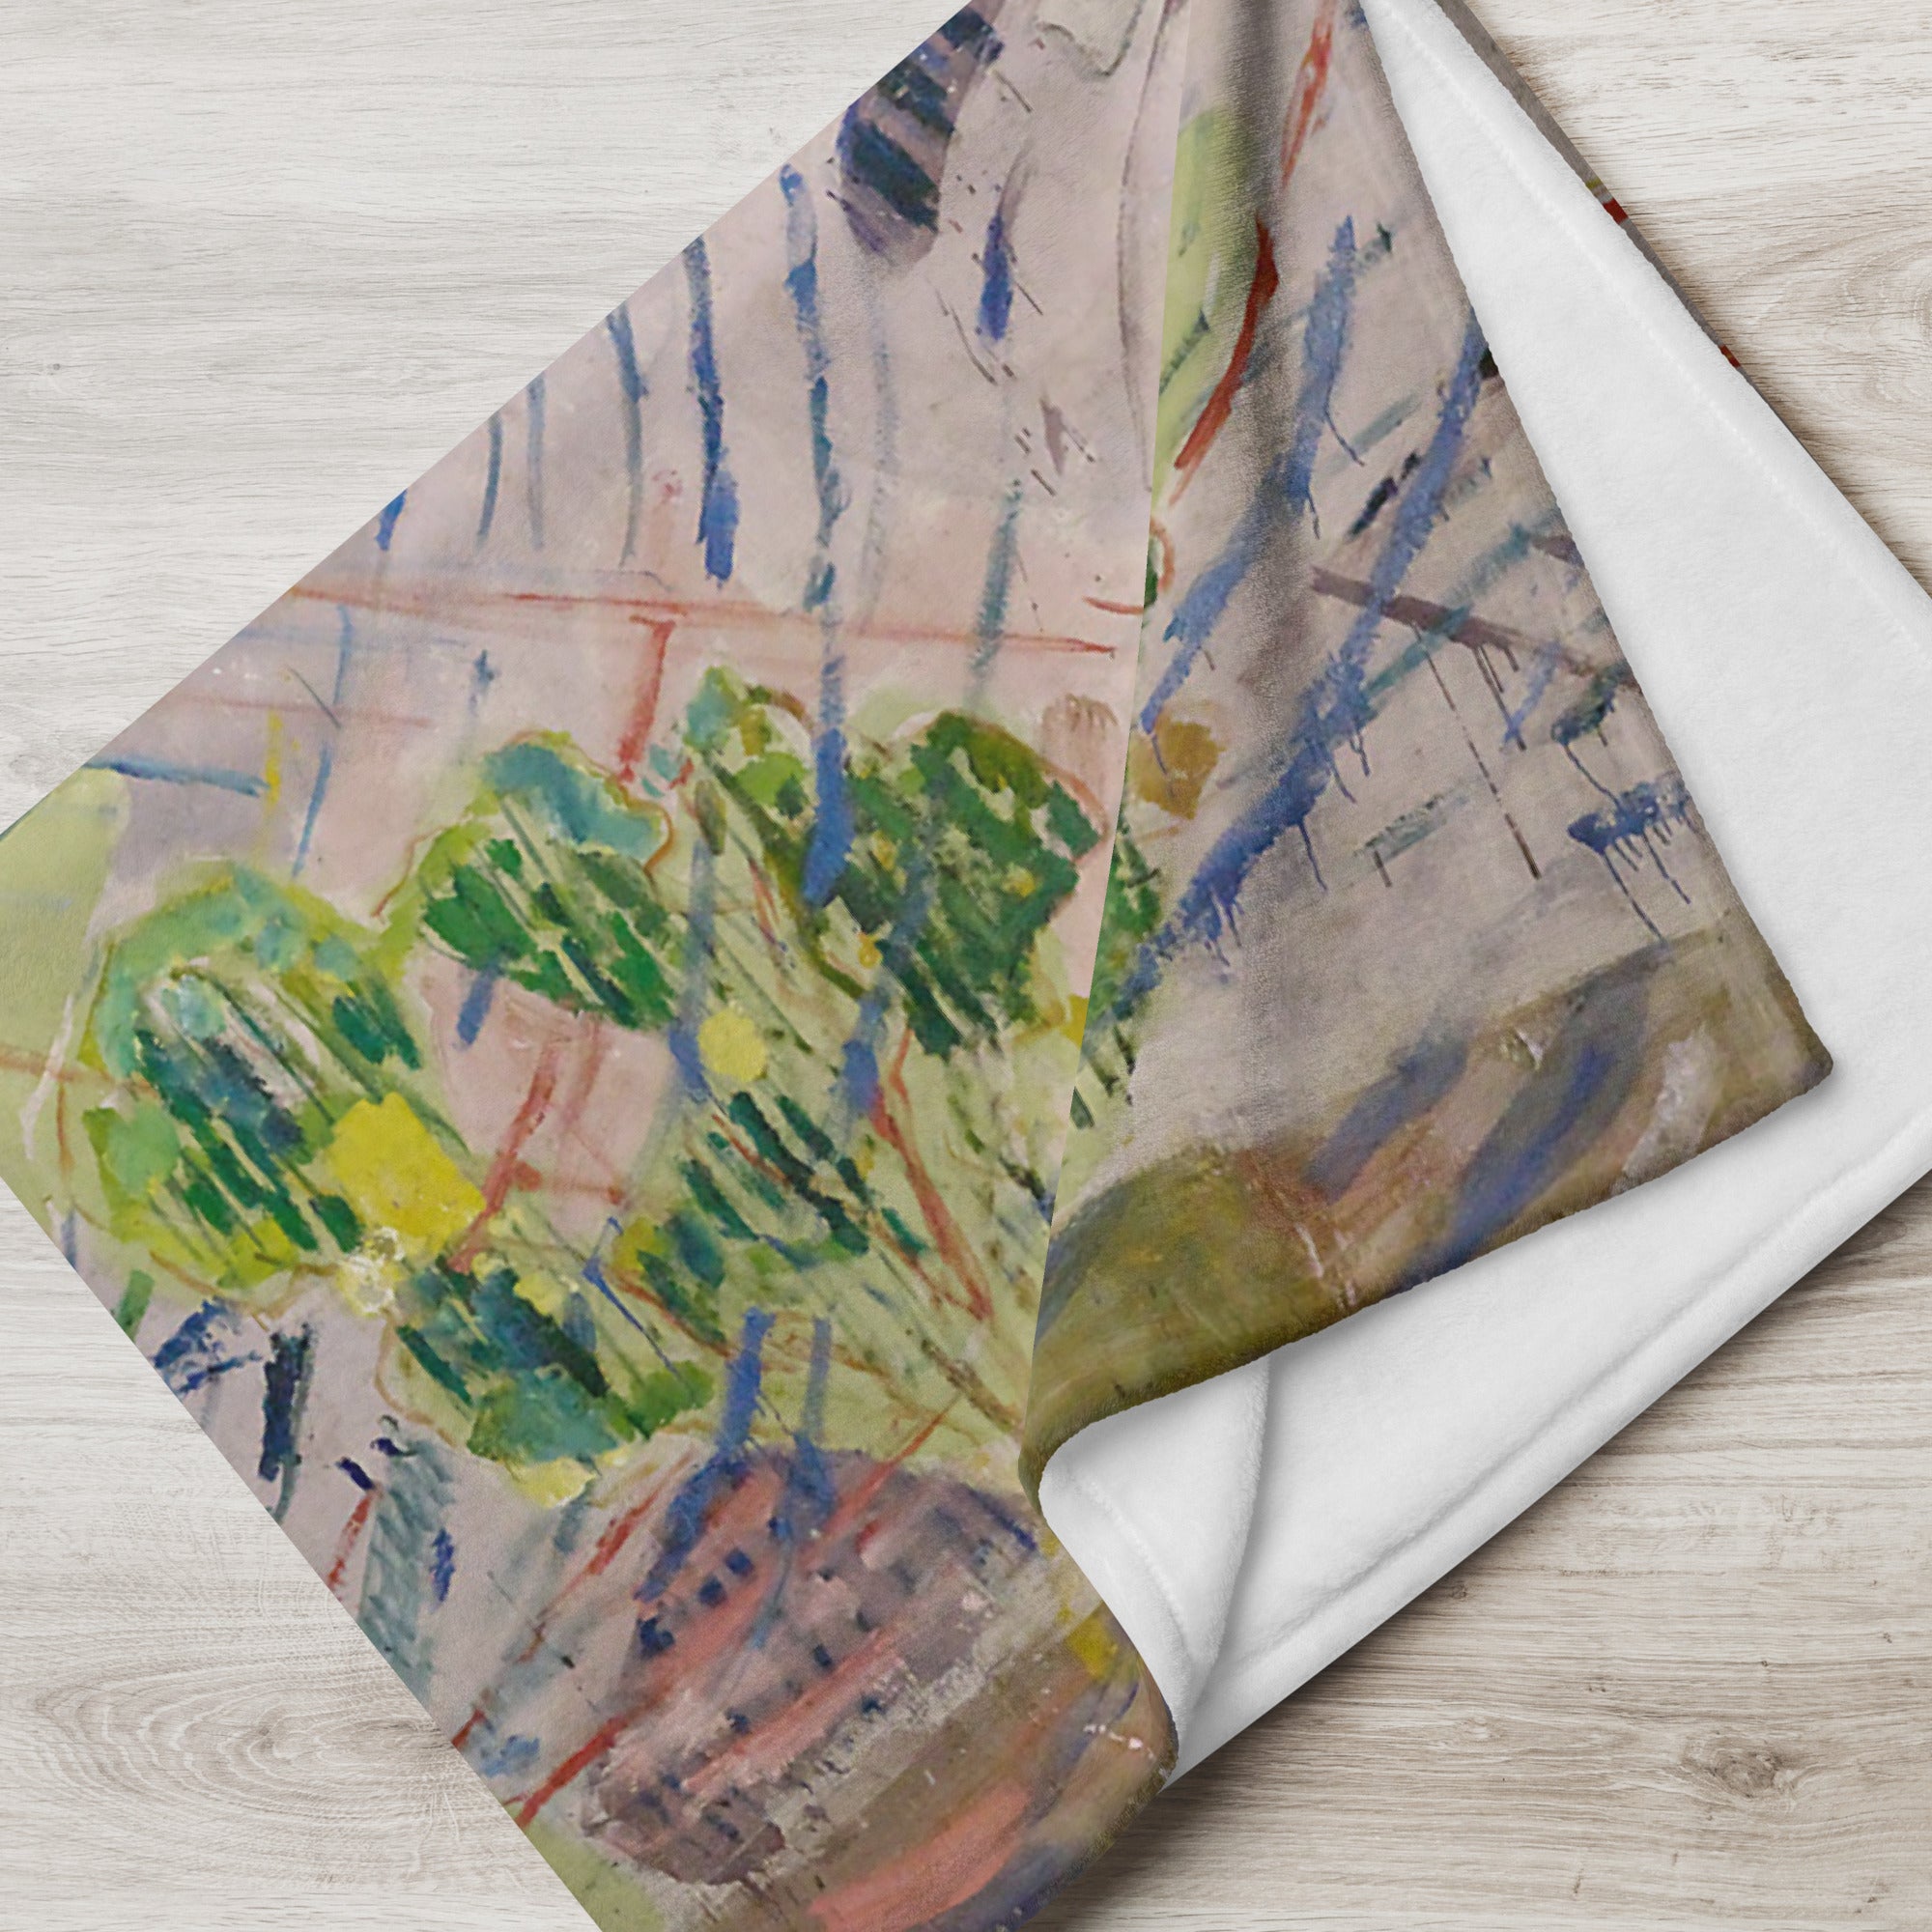 Edvard Munch 'The Sun' Famous Painting Throw Blanket | Premium Art Throw